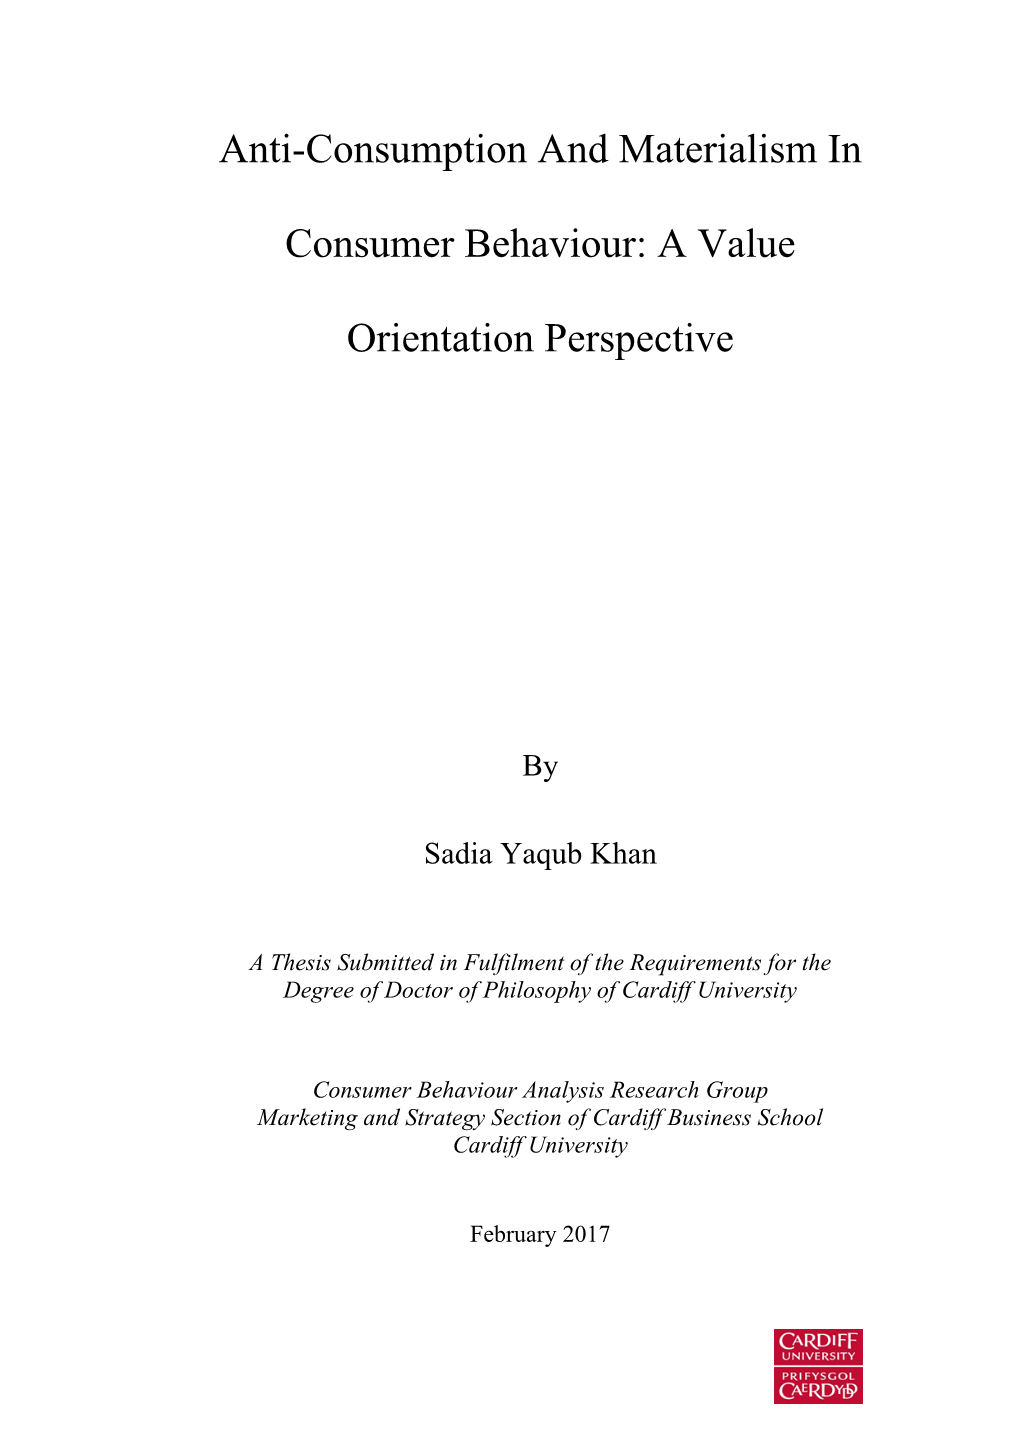 Anti-Consumption and Materialism in Consumer Behaviour: a Value